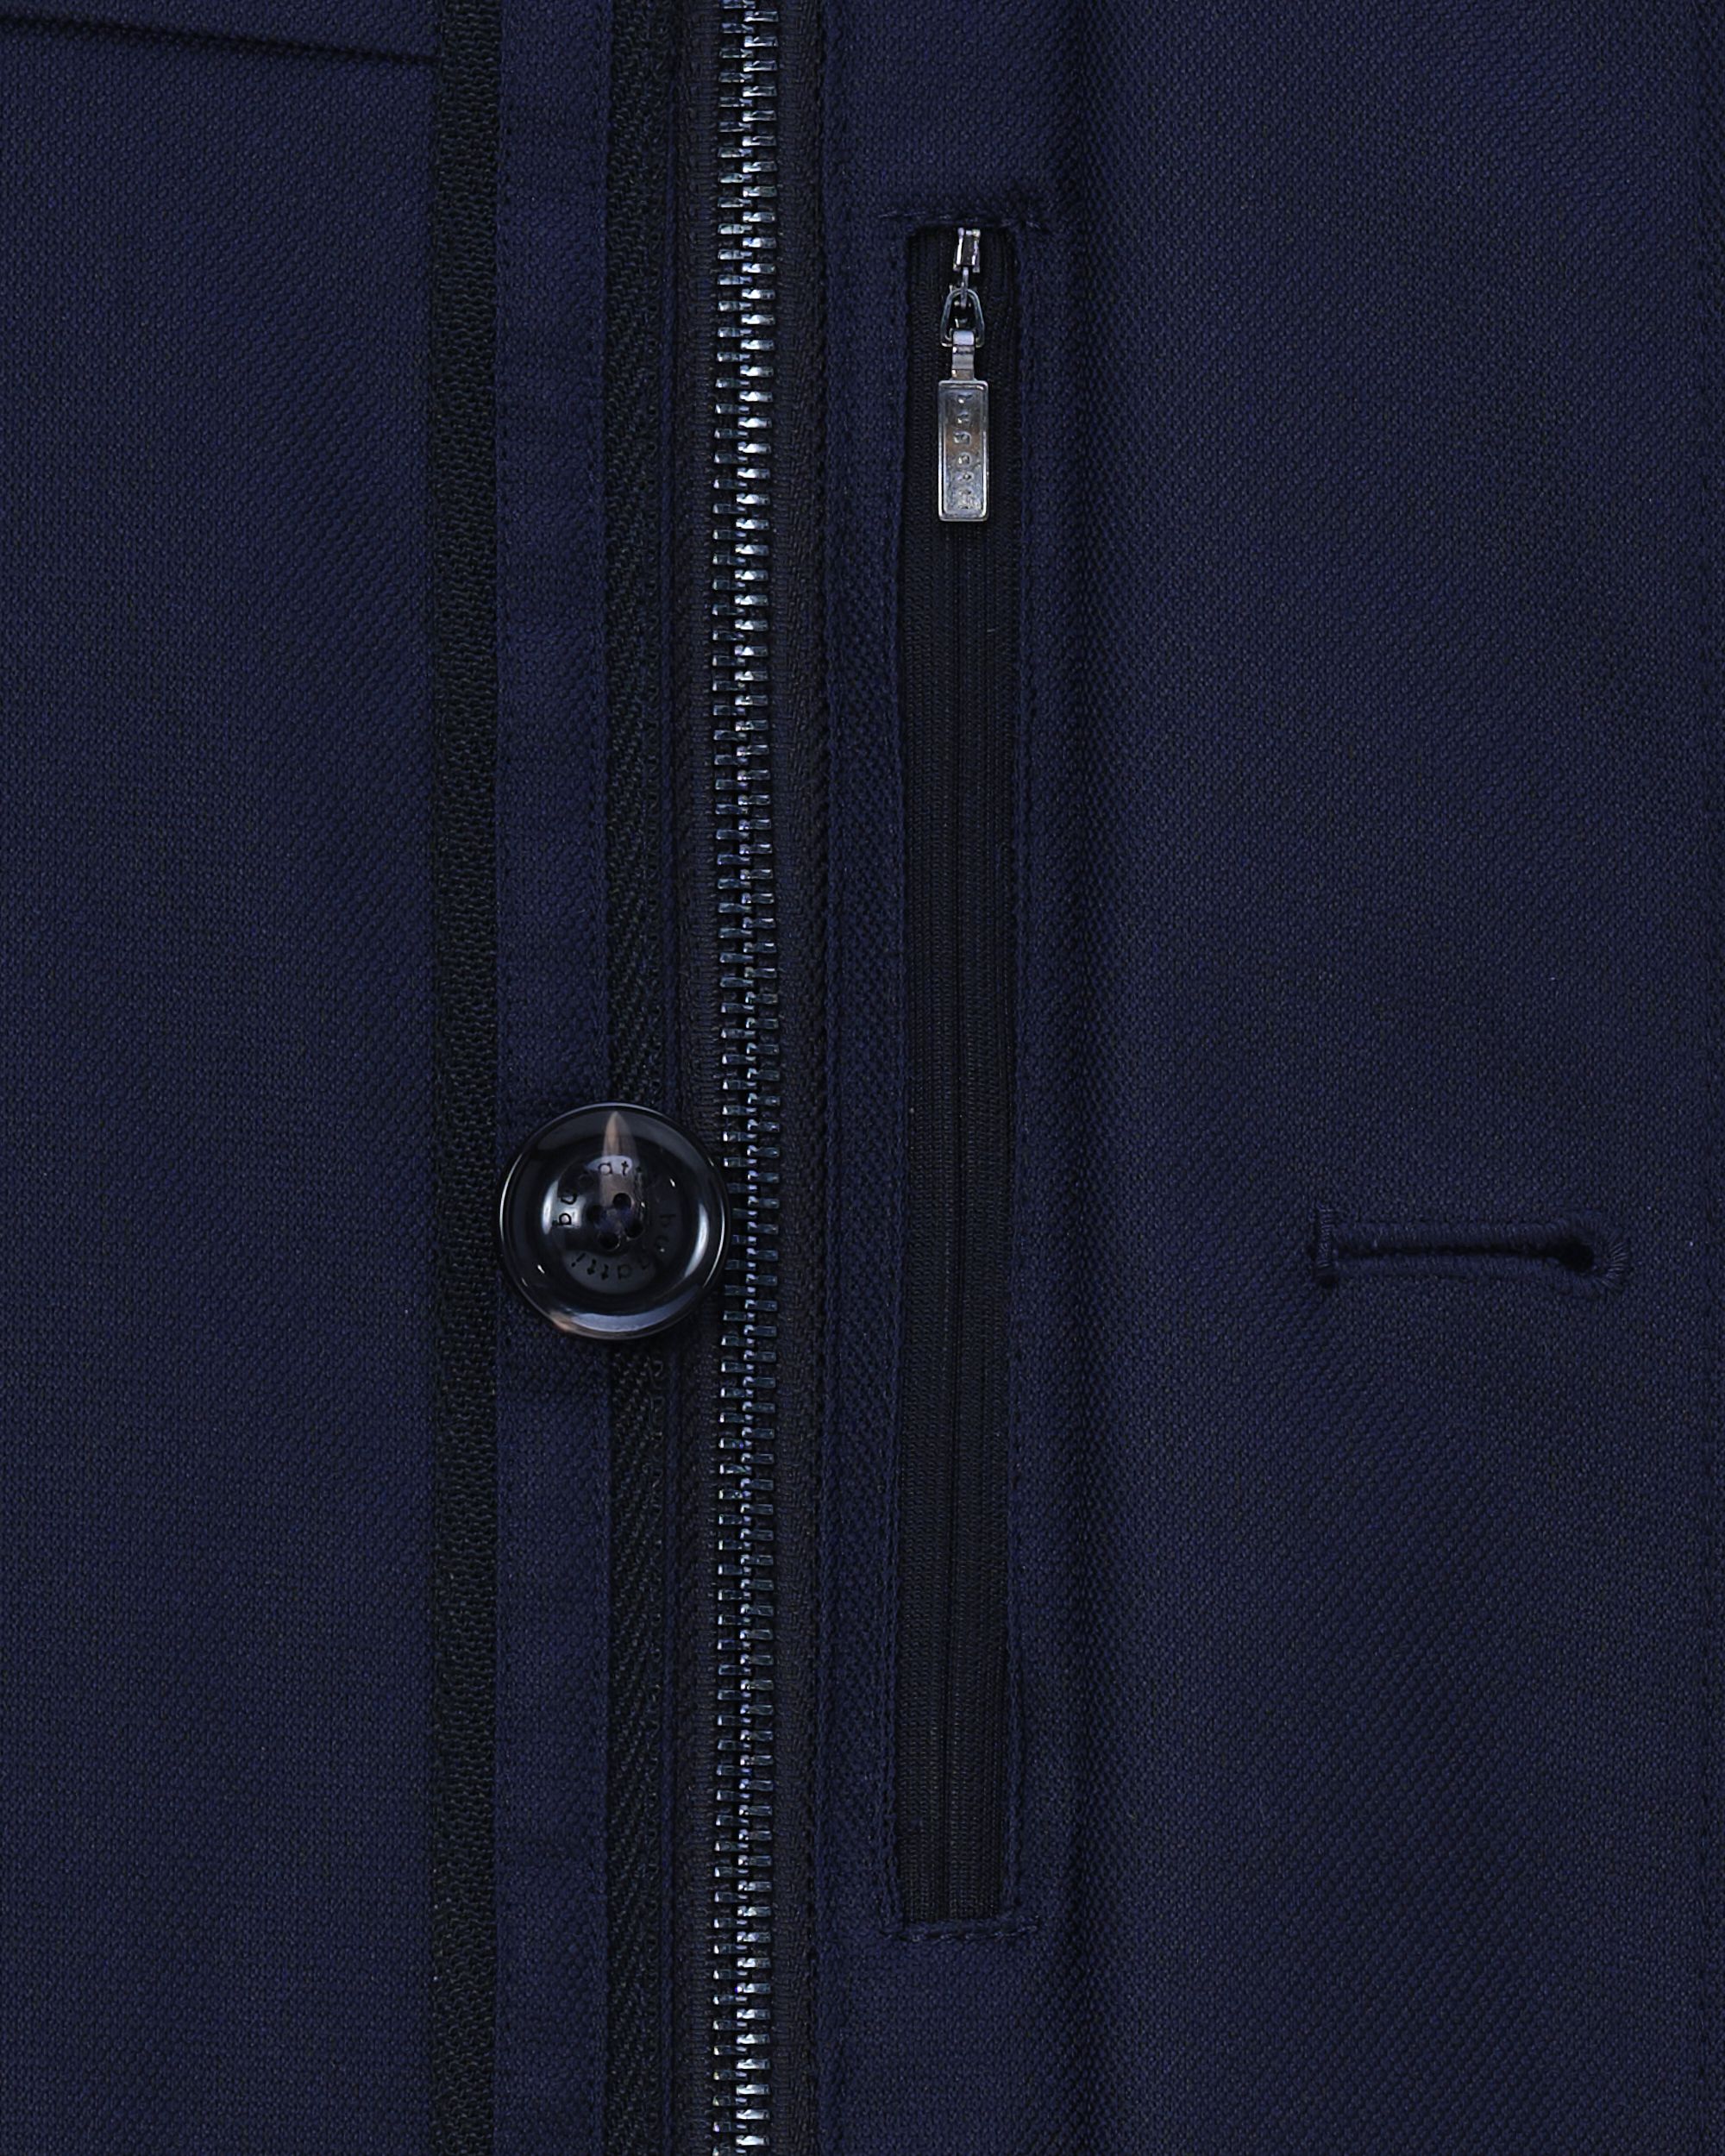 Bugatti clothing Gewatteerde jas Donker blauw 081650-001-56